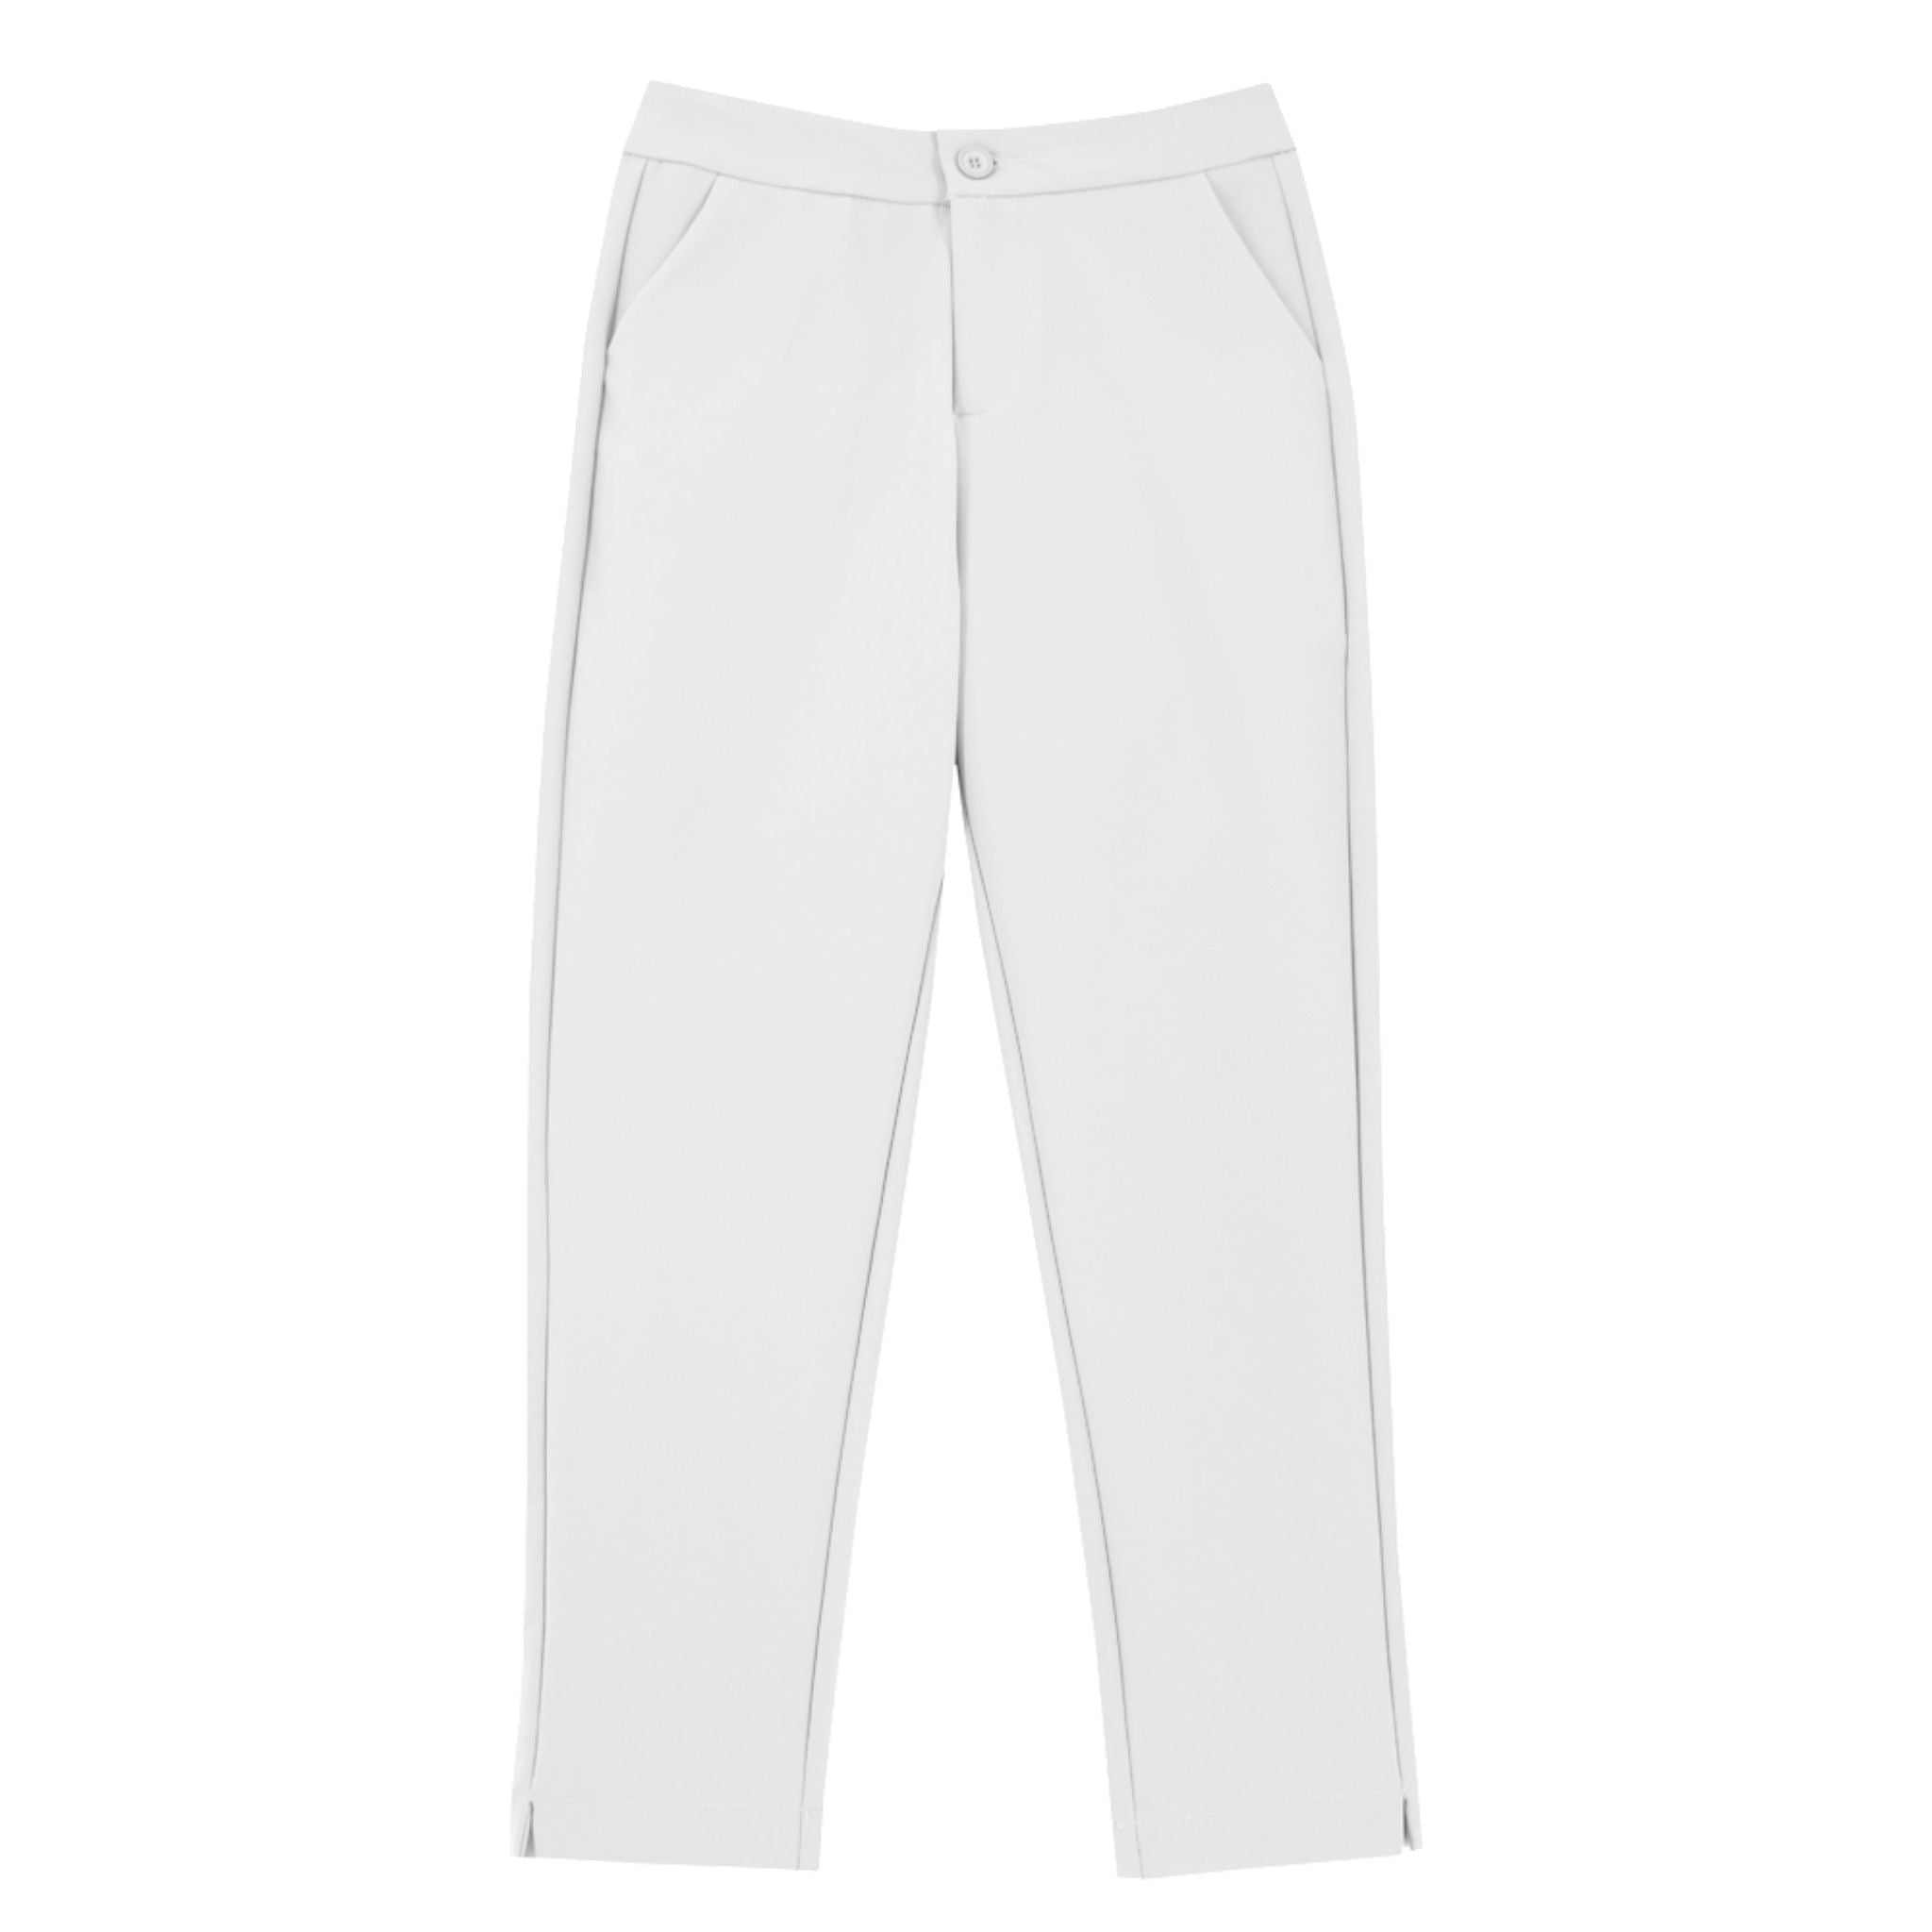 ENRO High-Waisted Capri Pants With Side Pockets - White